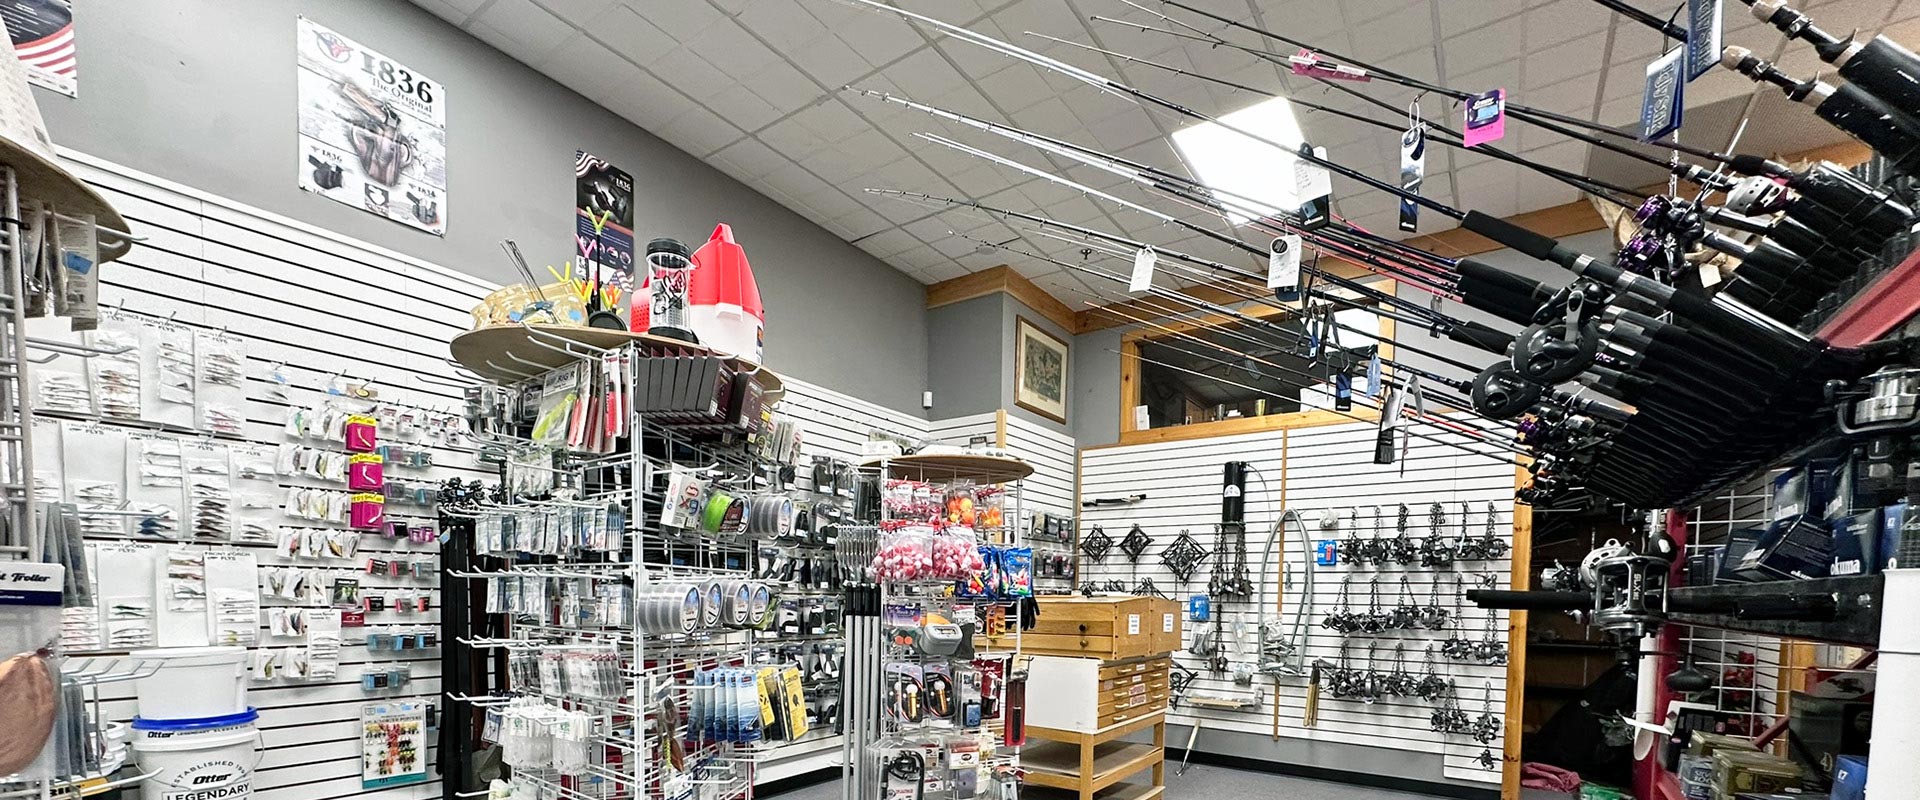 Willey's Sport Center - Maine Firearm/Gun Dealer, Hunting Gear, Fishing Gear,  Outdoor Gear, Sporting Goods, Browning Safes, Snowdog Snow Machines